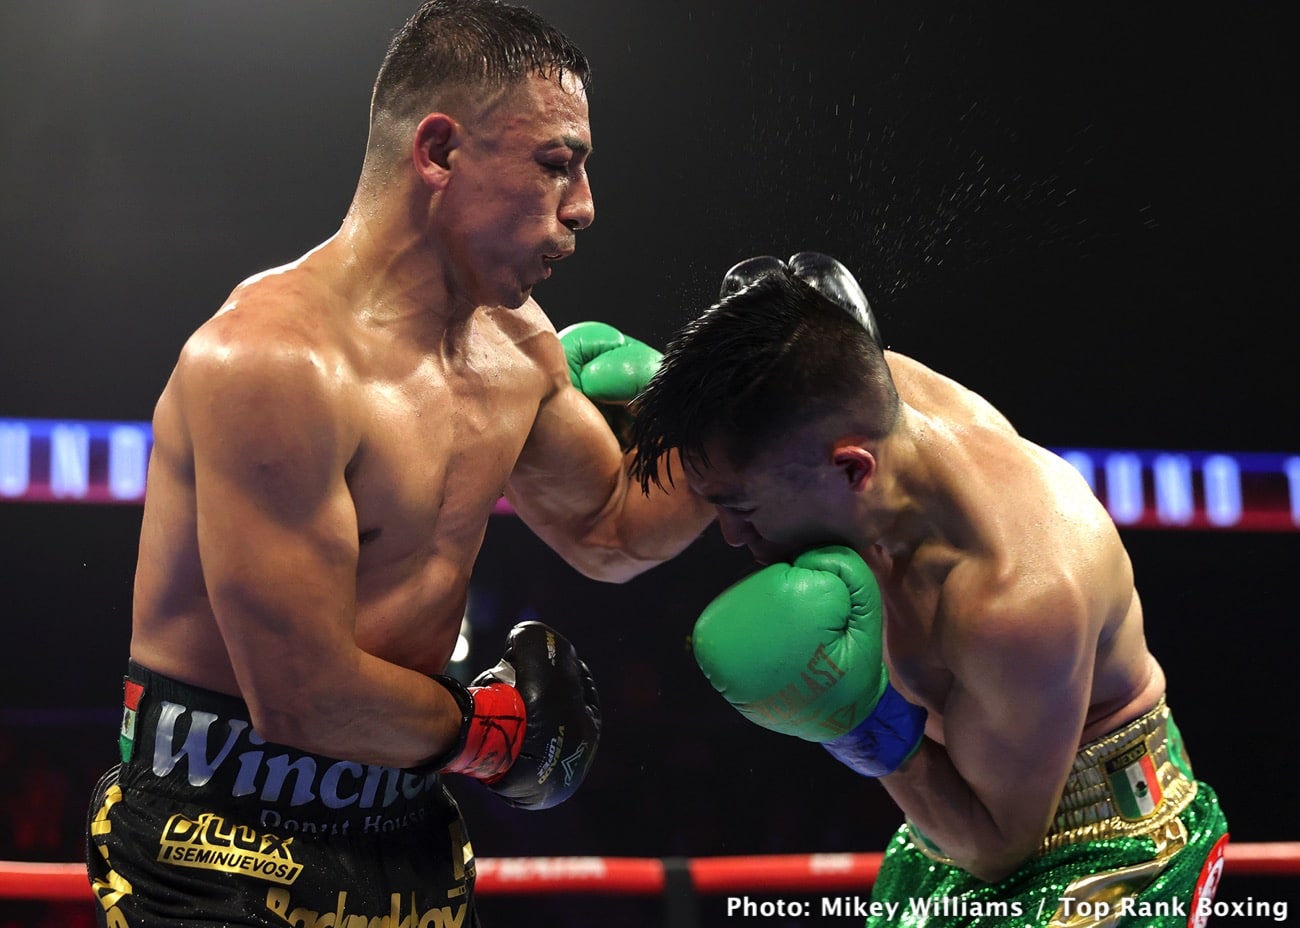 Luis Alberto Lopez defeats Joet Gonzalez - Boxing results